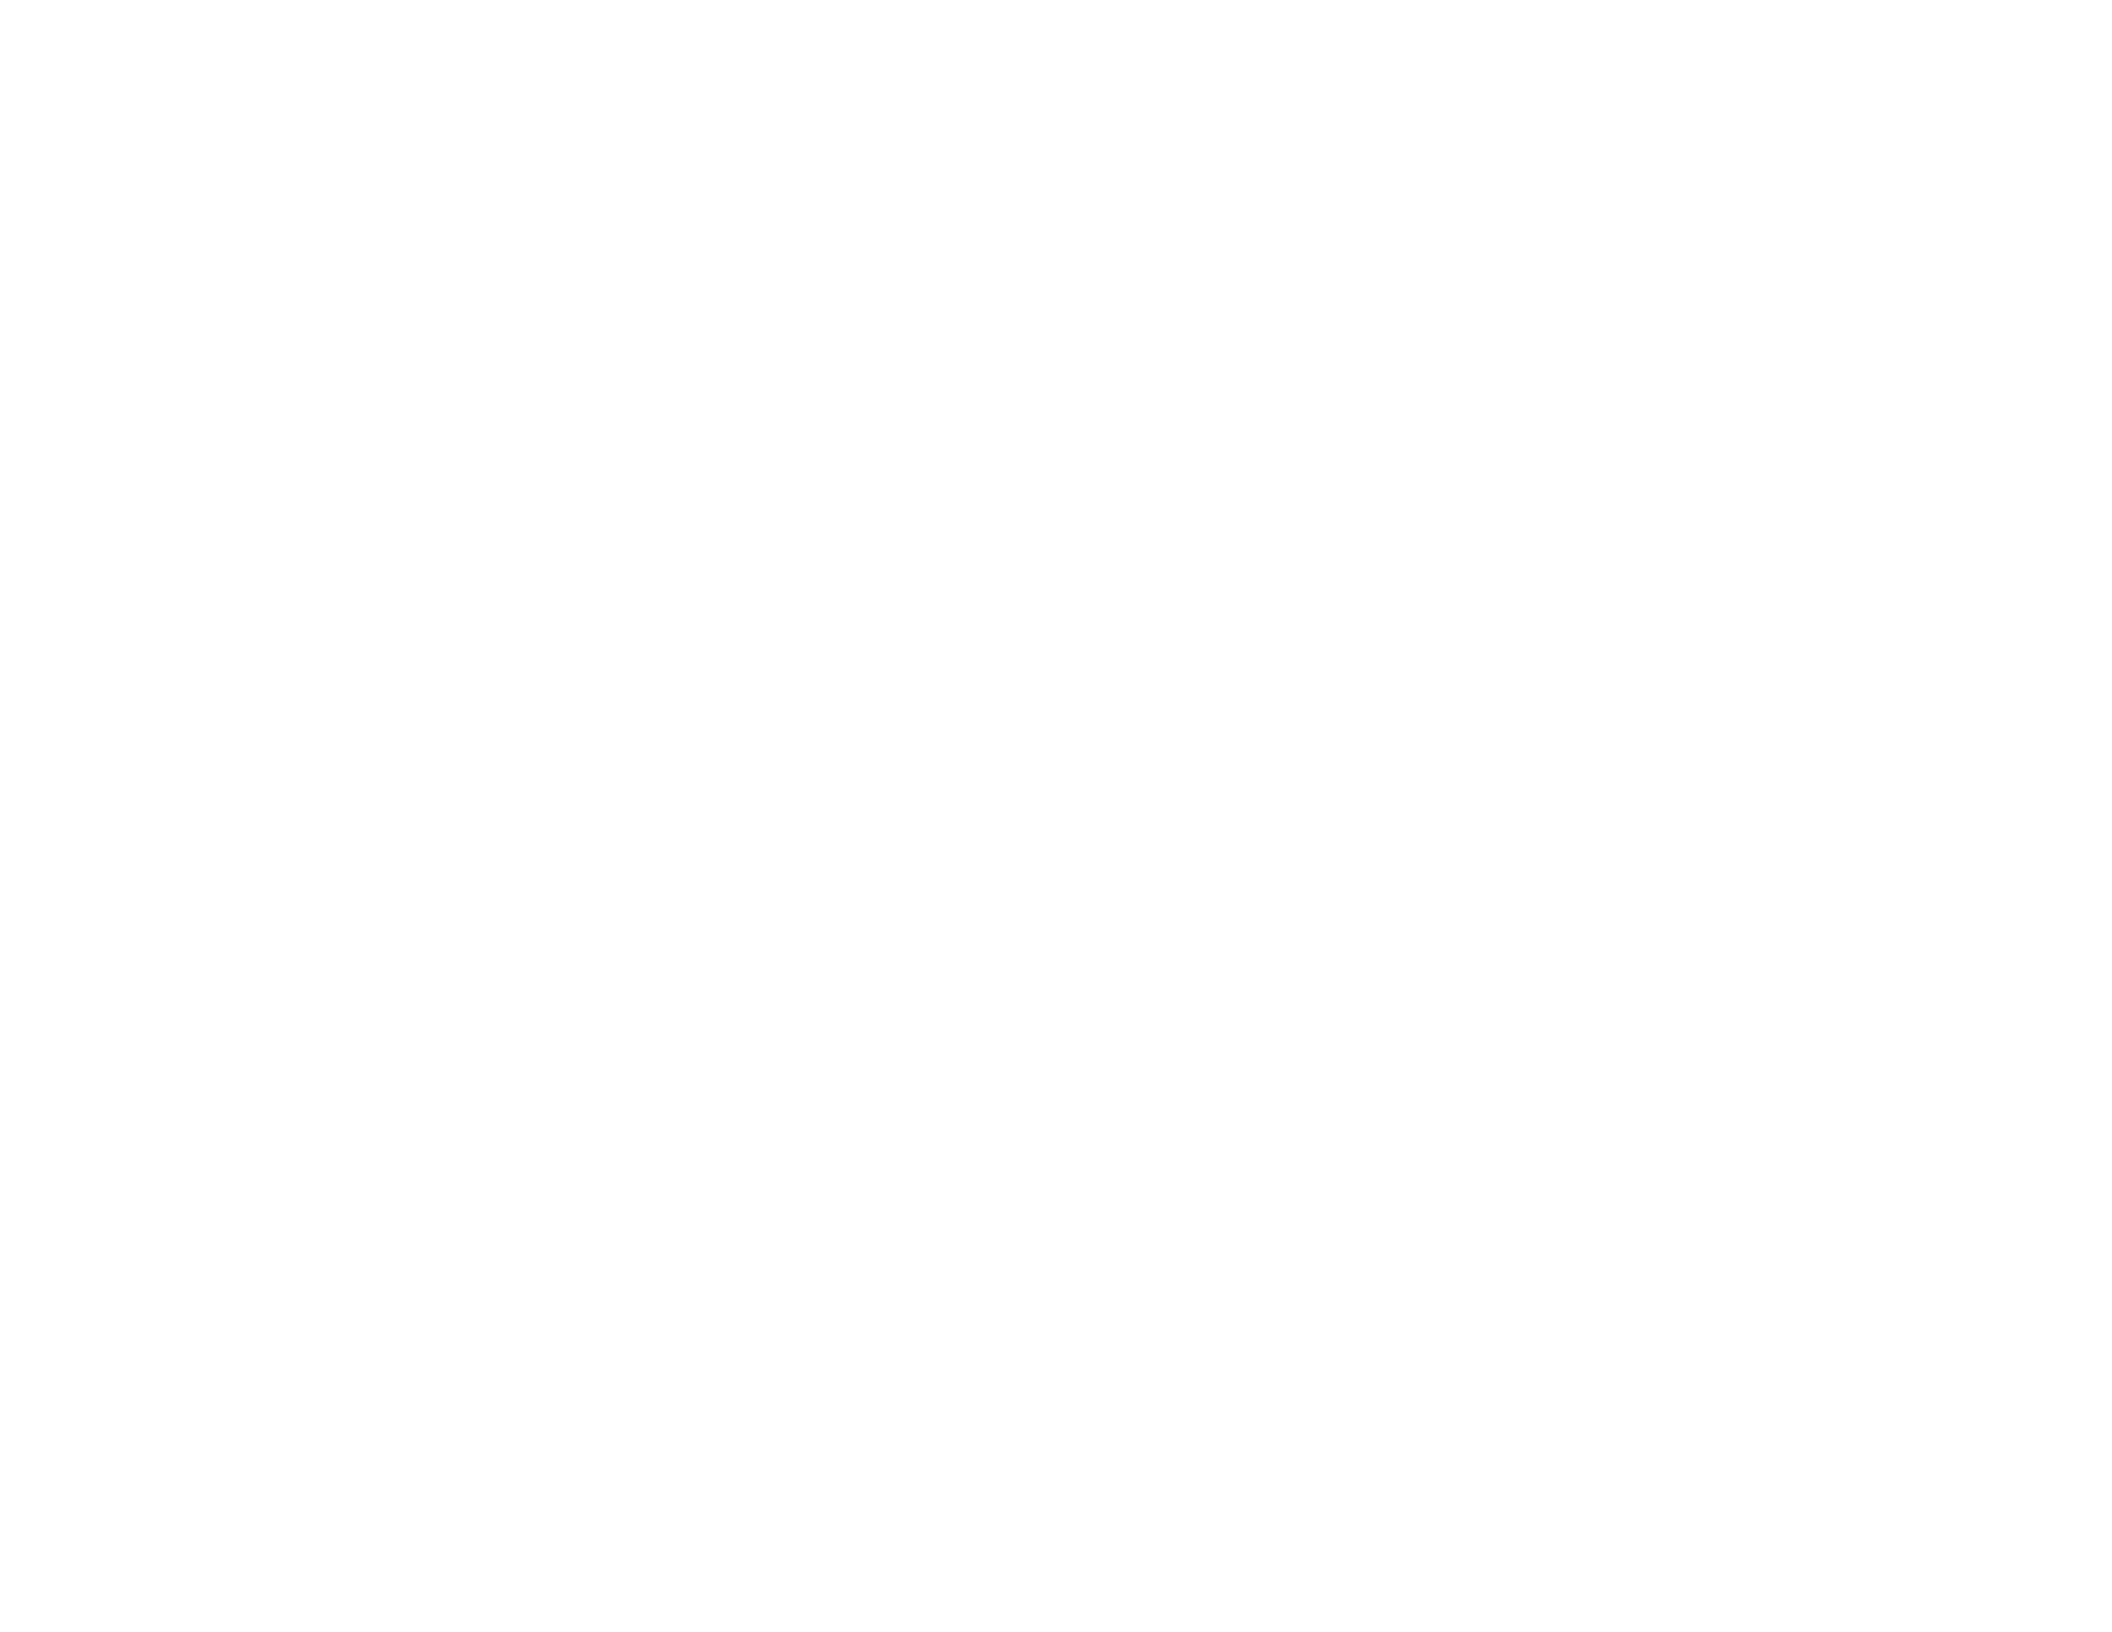 Kensington Derby &amp; Arts Festival